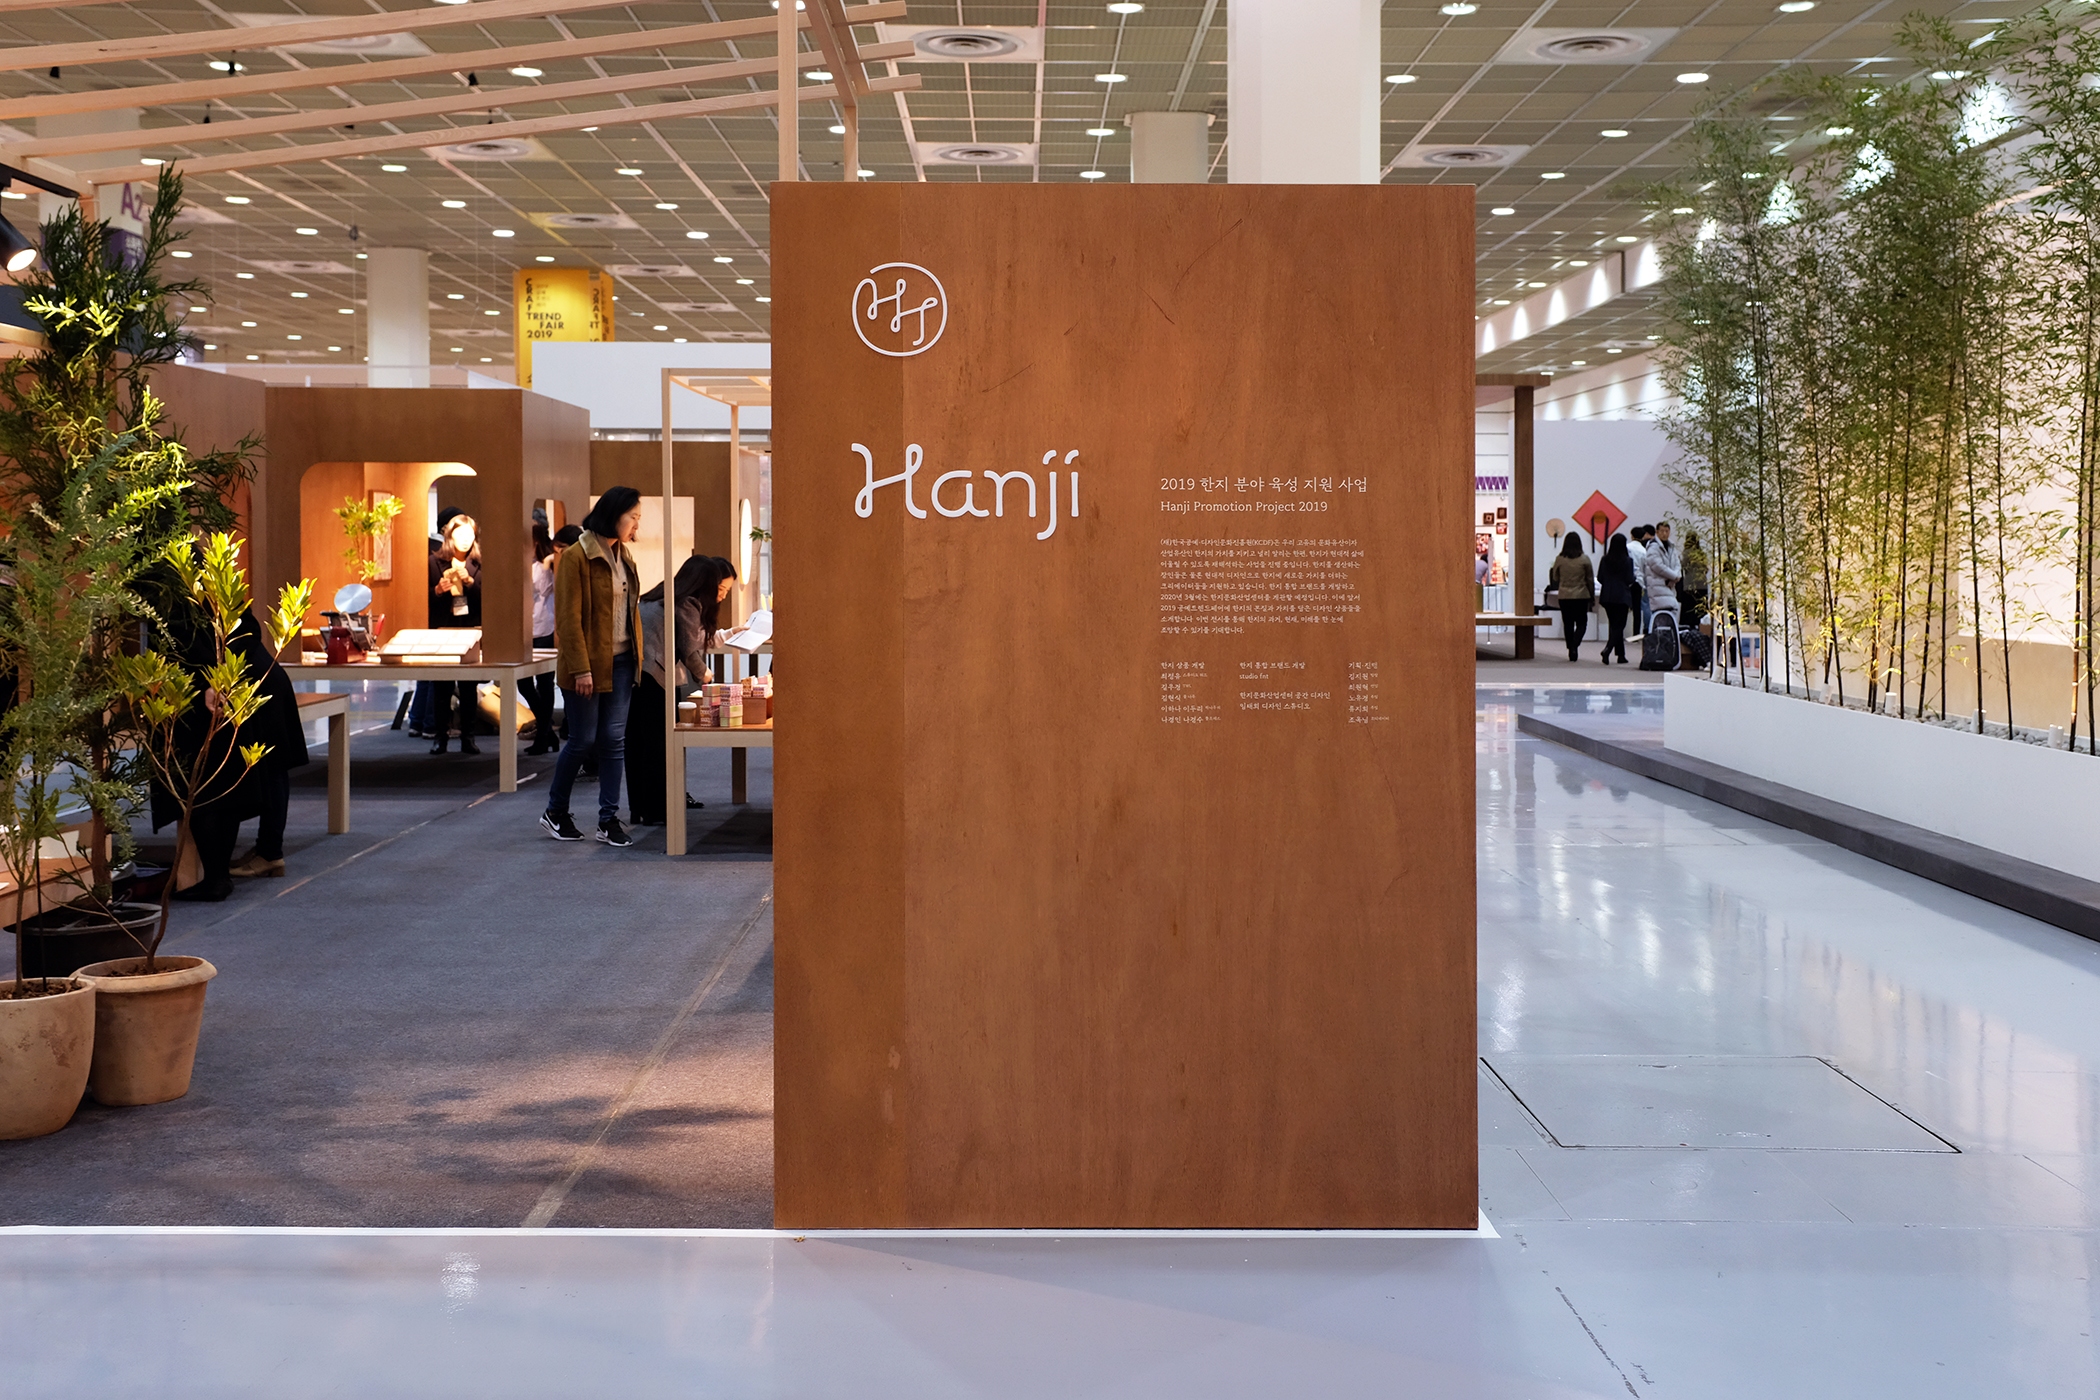 Brand identity and exhibition design by Studio fnt for Korean paper brand Hanji